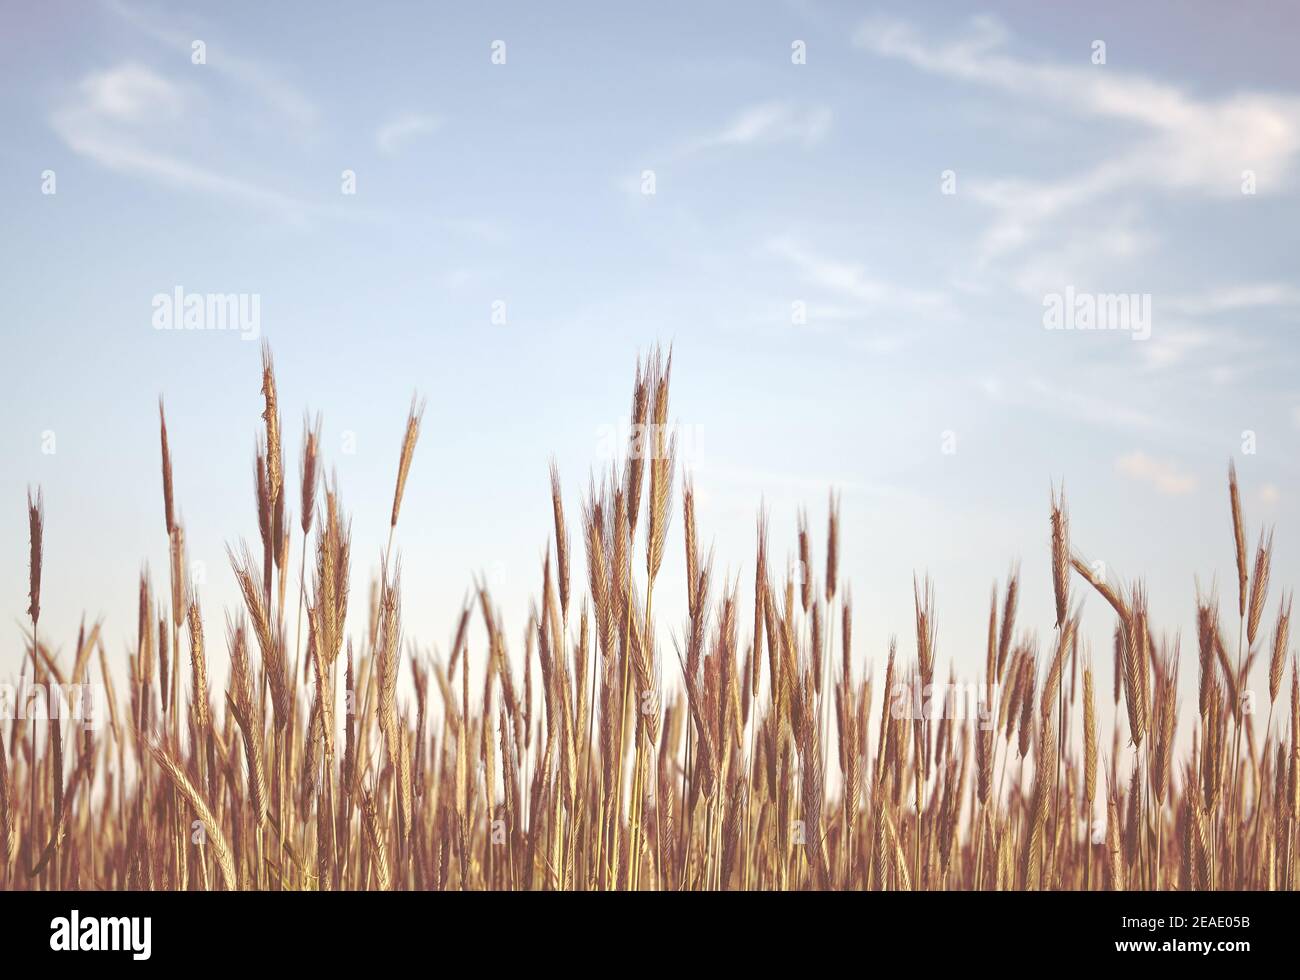 Retro getöntes Bild eines Kornfeldes, selektiver Fokus. Stockfoto